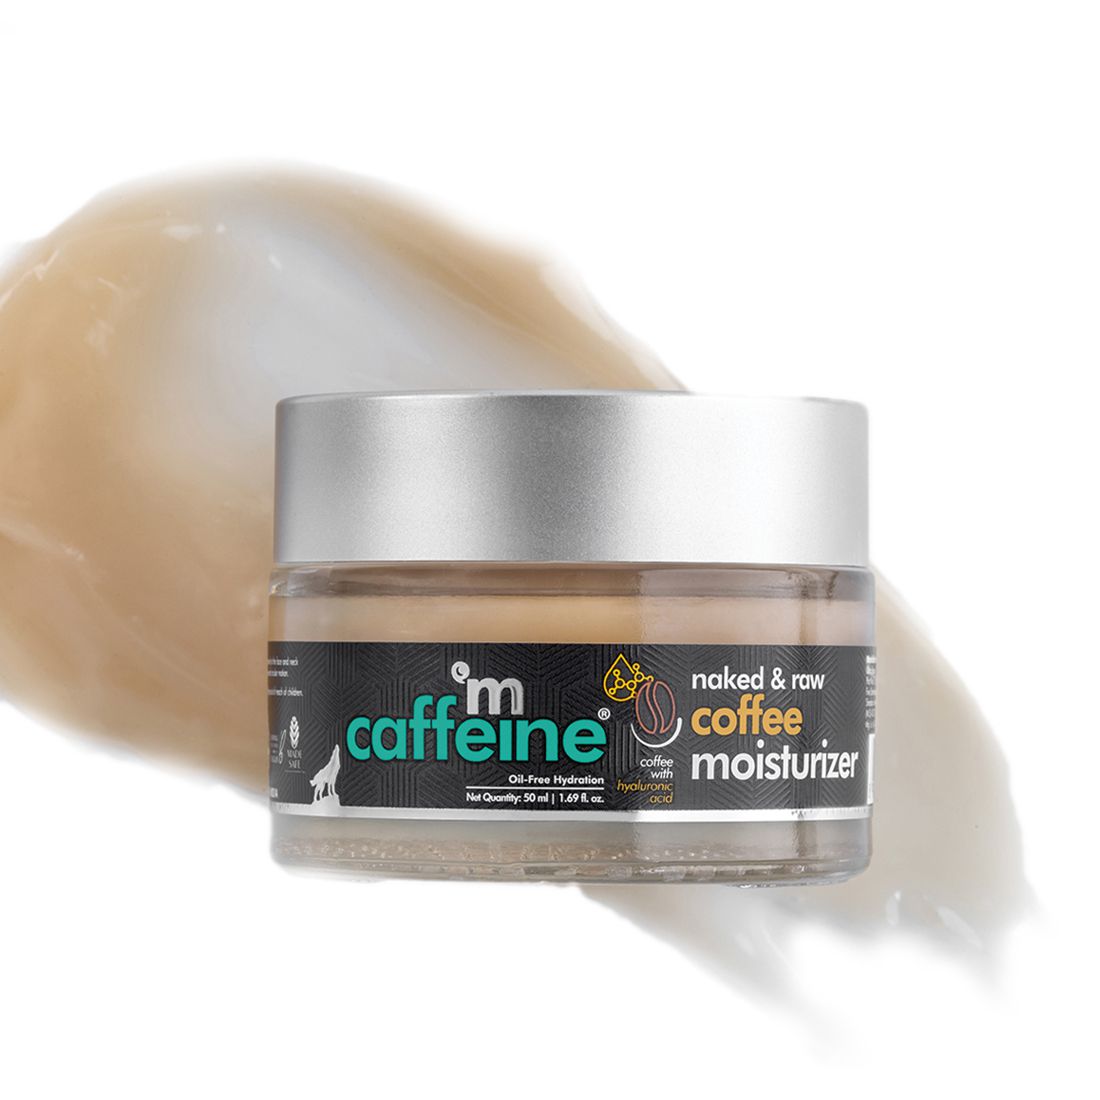 mCaffeine Oil-Free Coffee Moisturizer with Hyaluronic Acid & Pro Vitamin B5 (50ml)